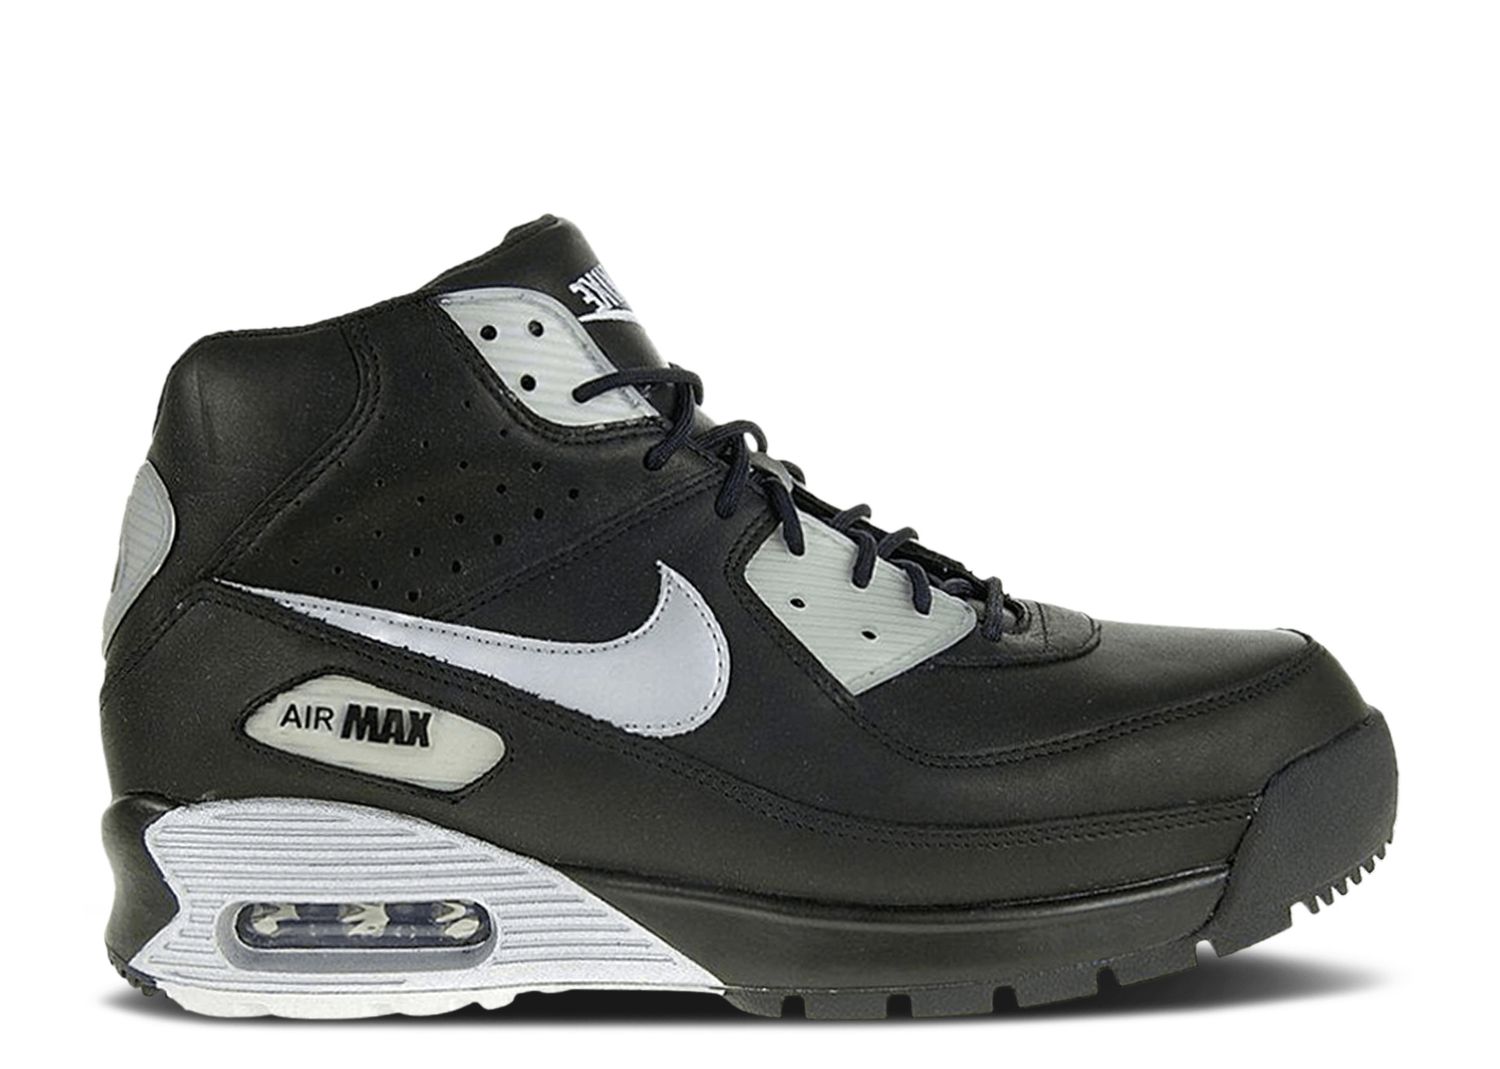 Air Max 90 Boot 'Black Metallic Silver' Nike 316339 002 black